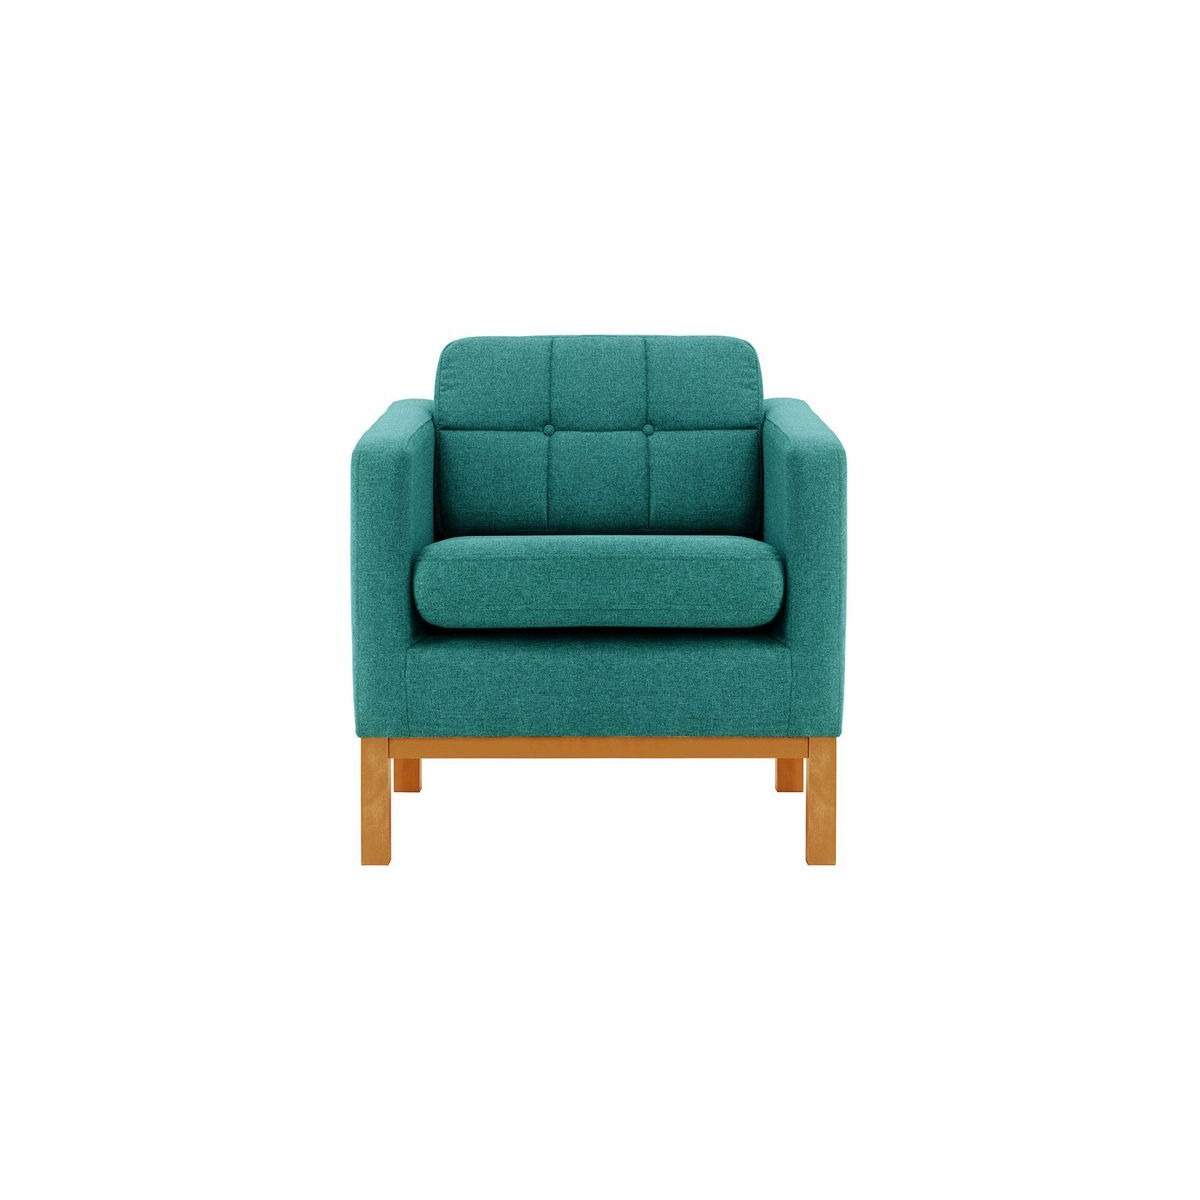 Normann Armchair, turquoise, Leg colour: aveo - image 1